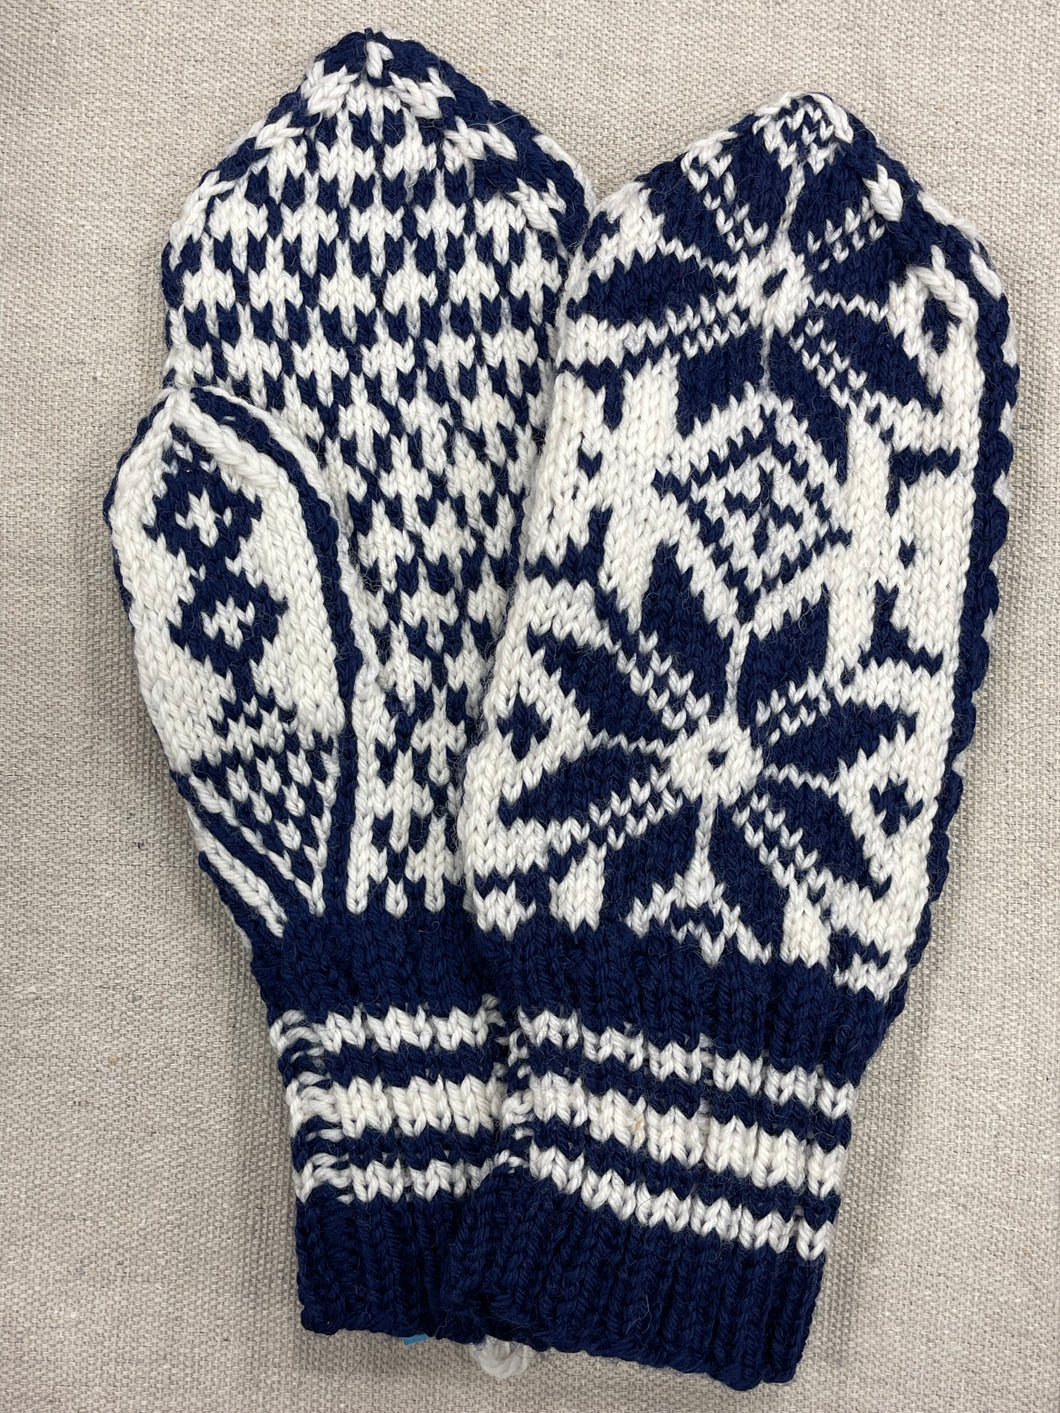 Hand-knit Norwegian Mittens